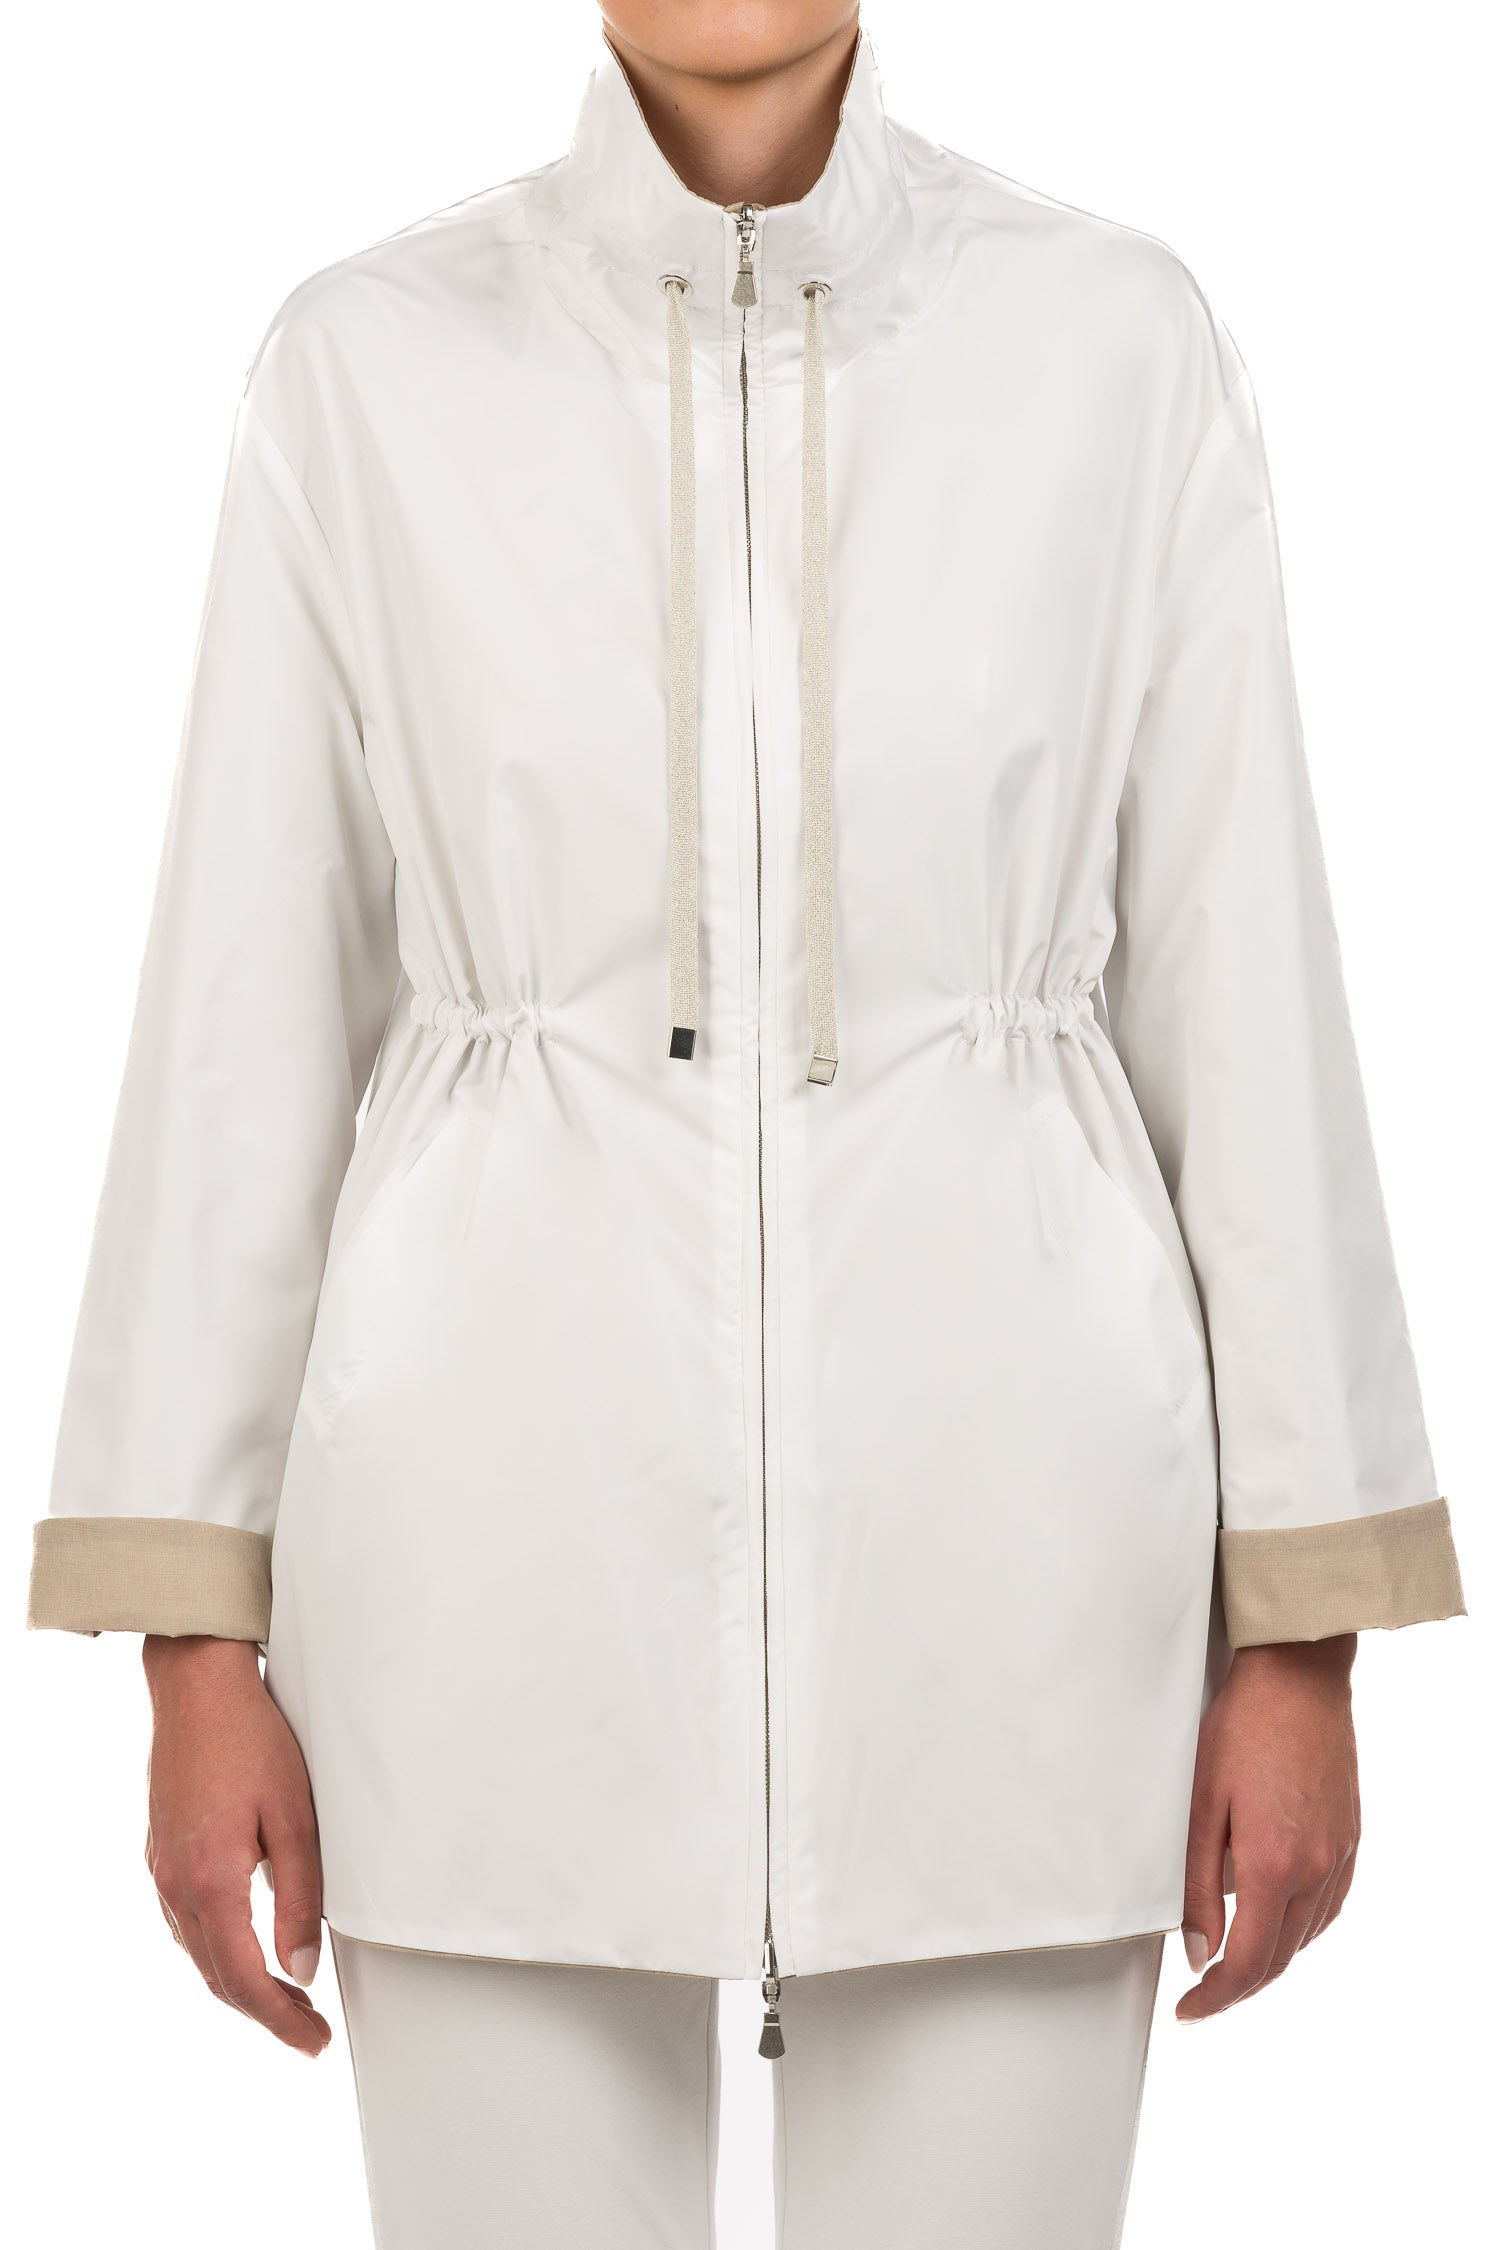 White & Beige Reversible Raincoat